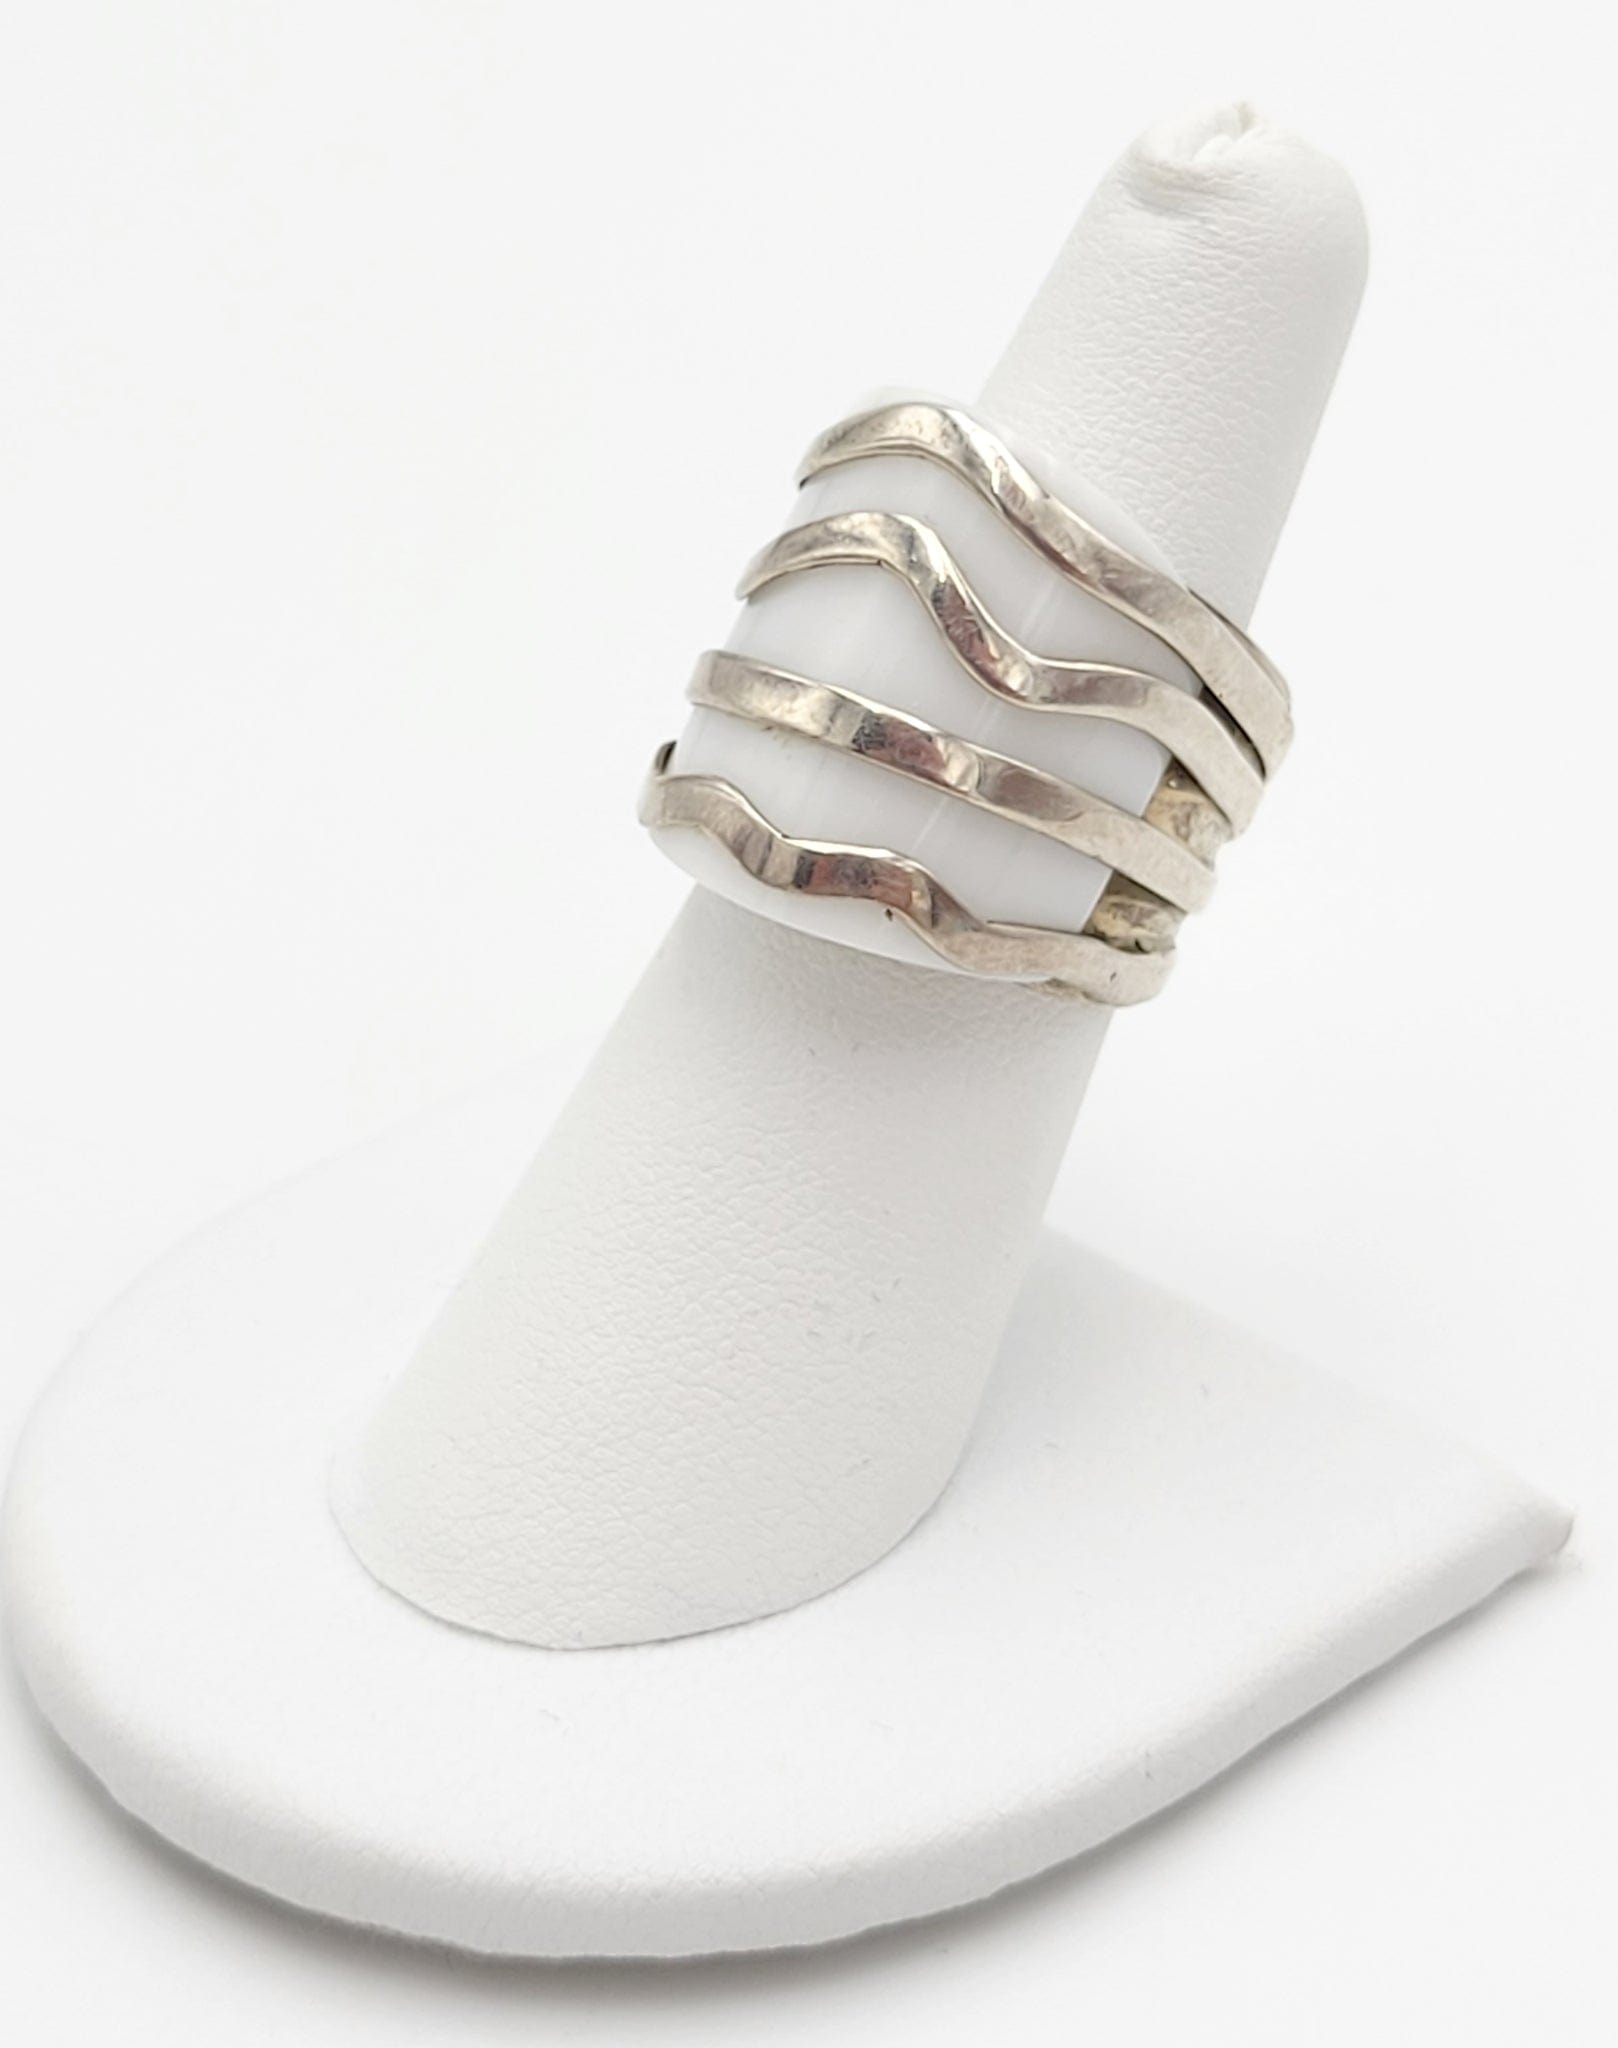 Ilaria Peru Jewelry Designer Ilaria Peru Sterling Silver & White Lucite Statement Cocktail Ring 1990's